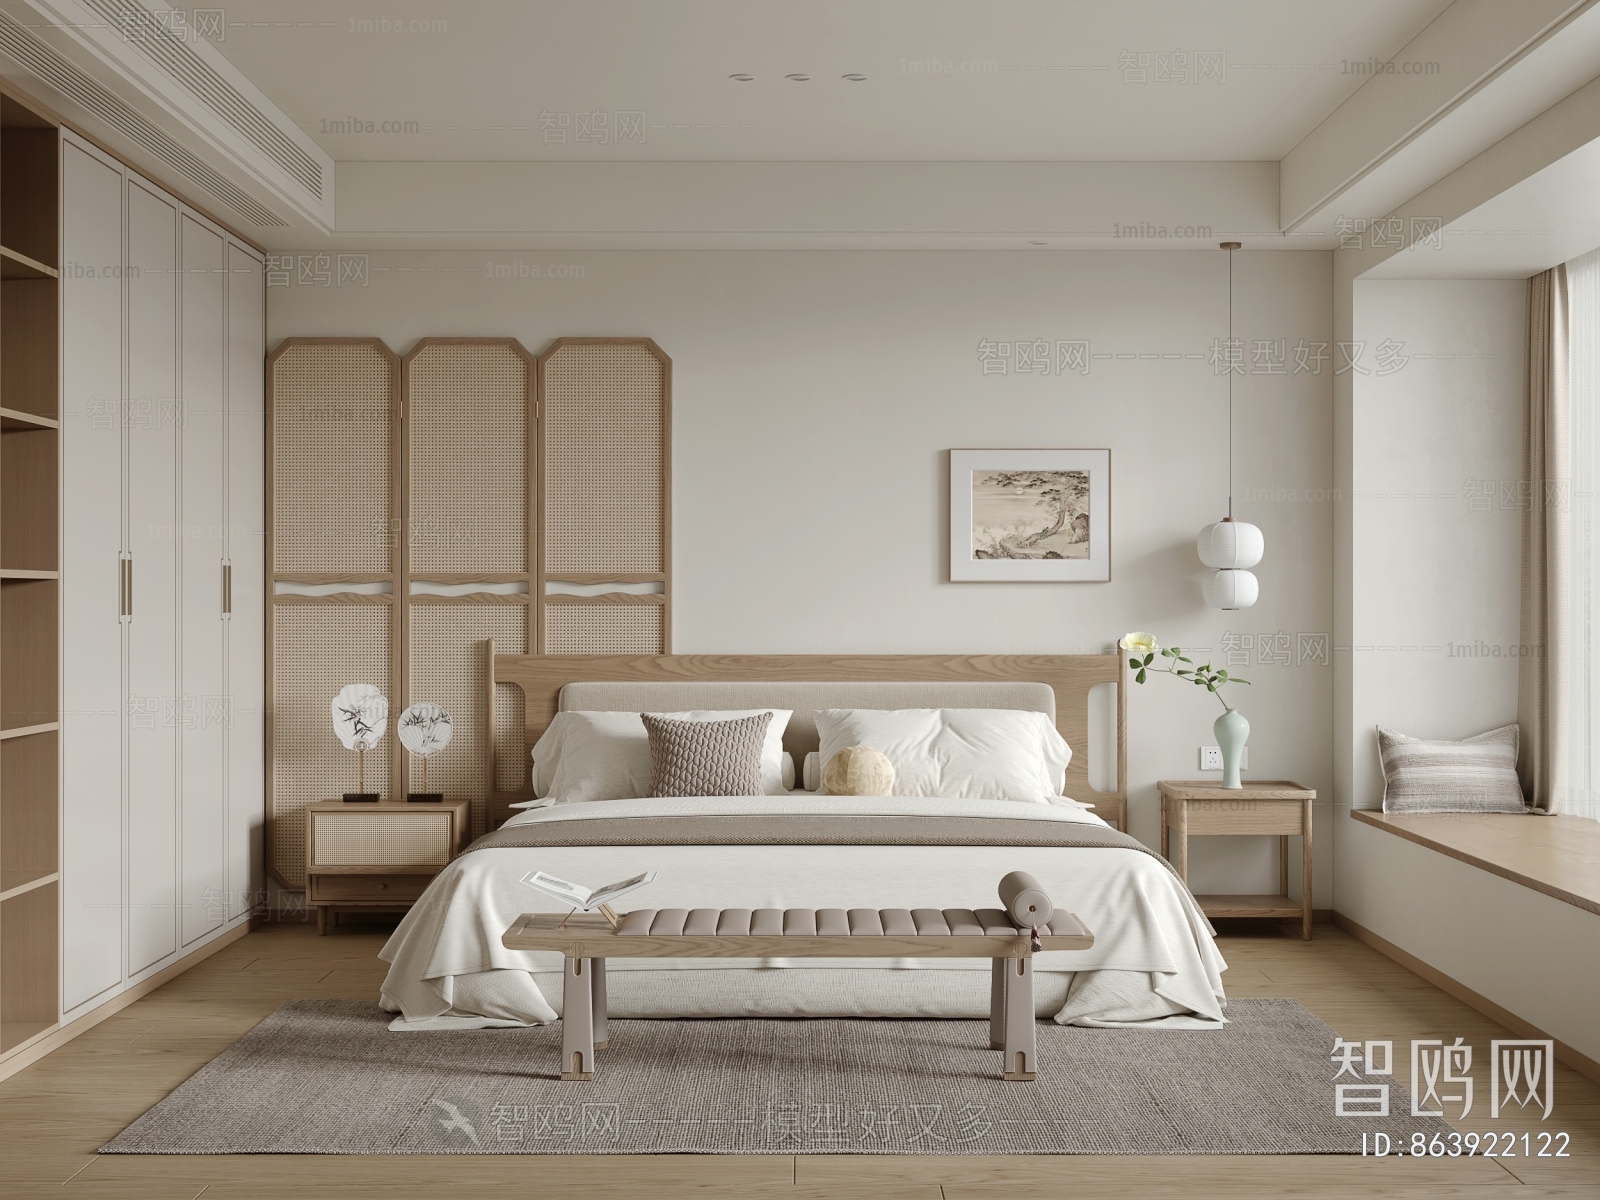 New Chinese Style Wabi-sabi Style Bedroom